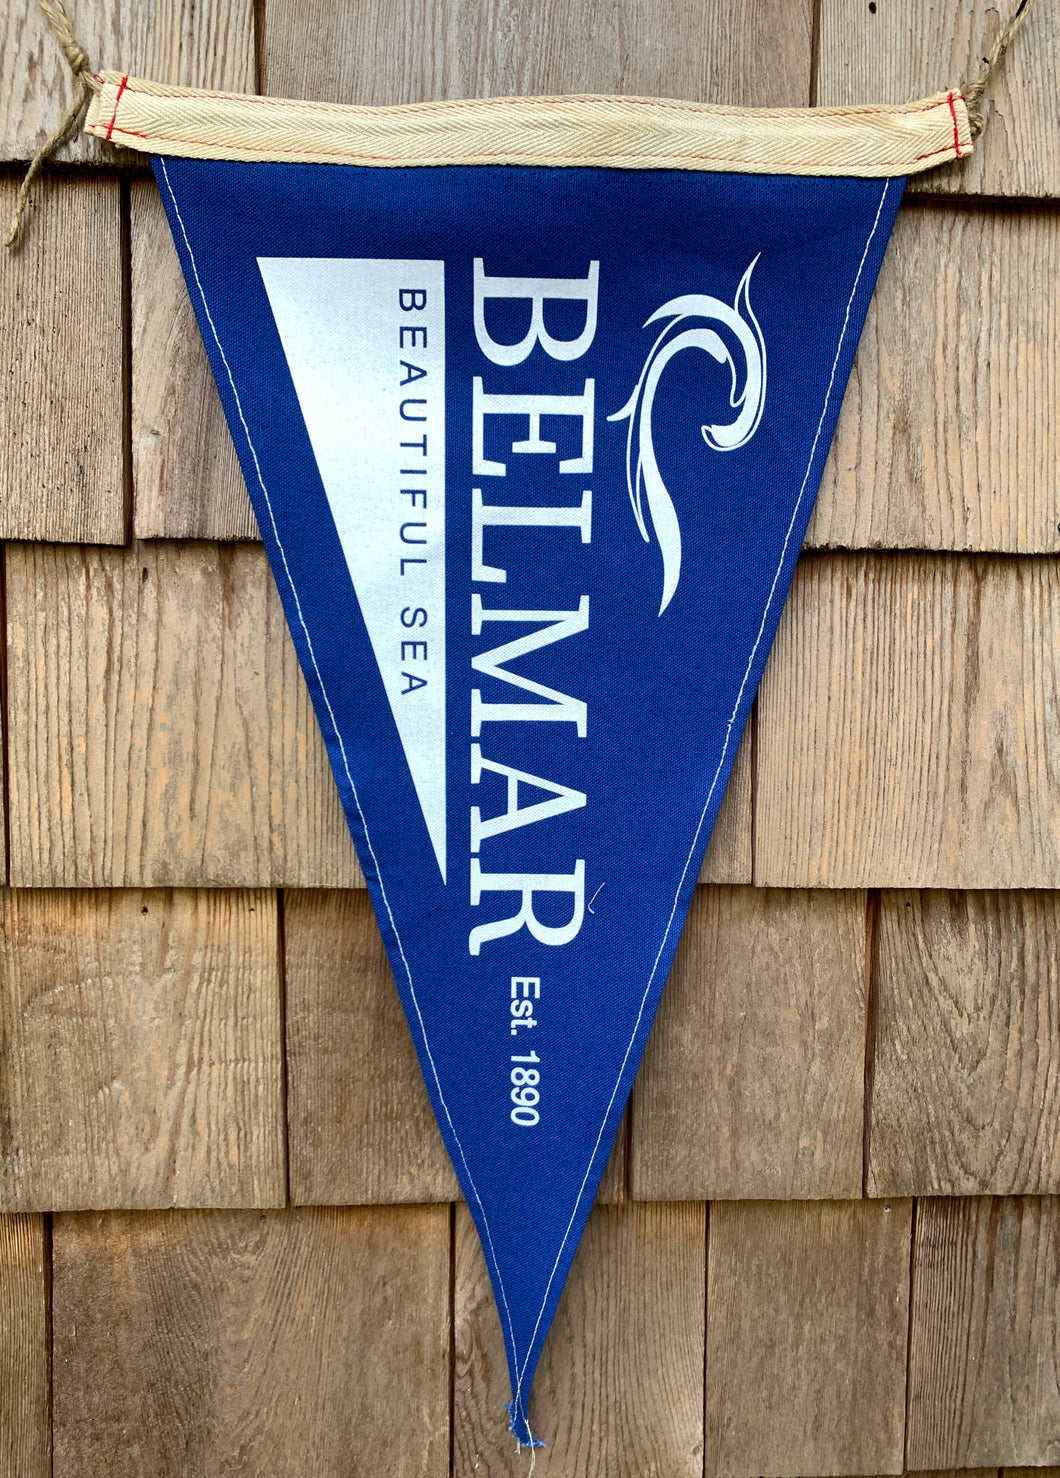 Pennant - Beach Flag - Belmar, NJ Classic - Waxed Surf Flags